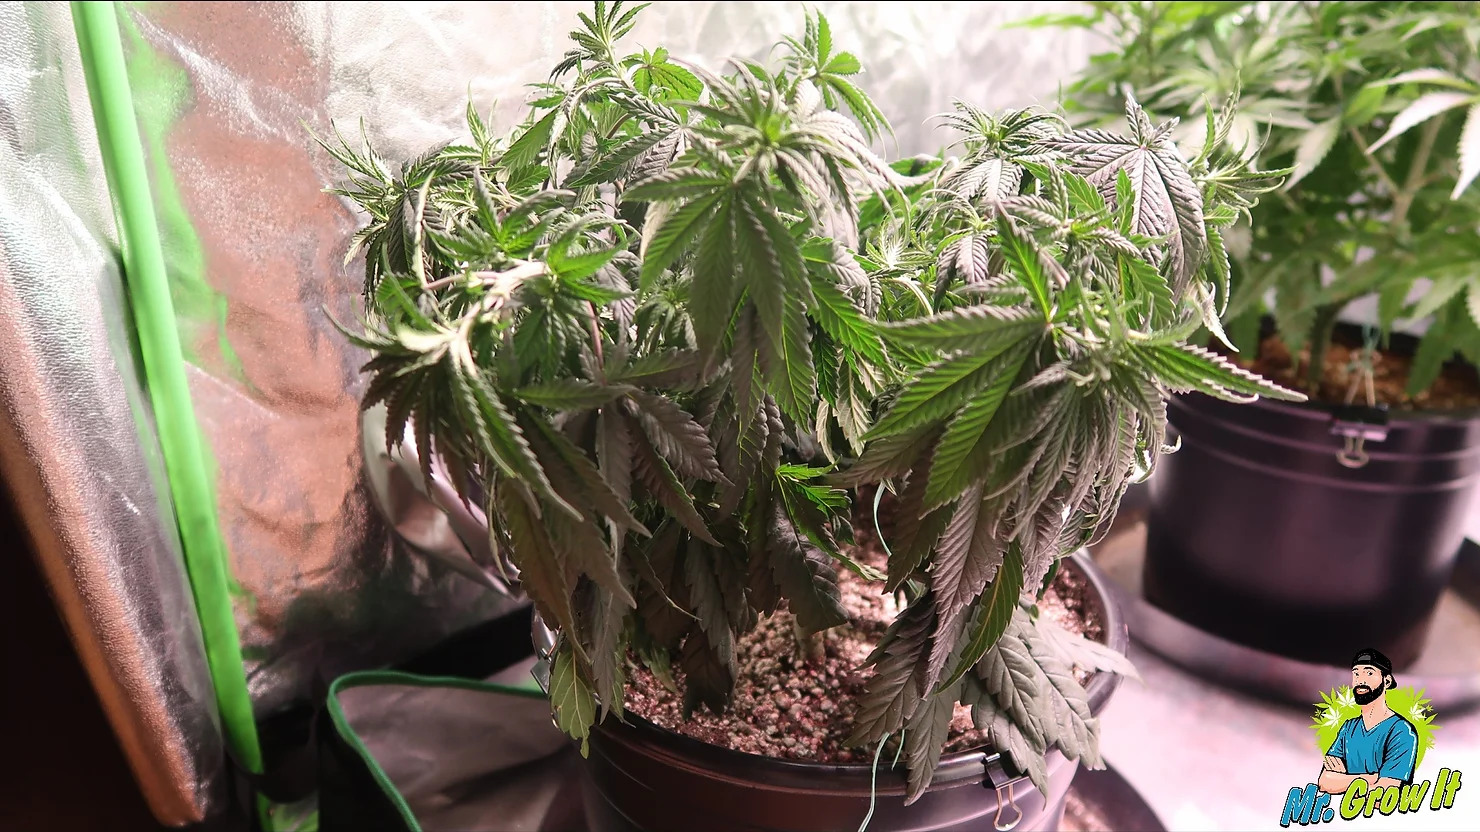 Under-Watering Cannabis Plants